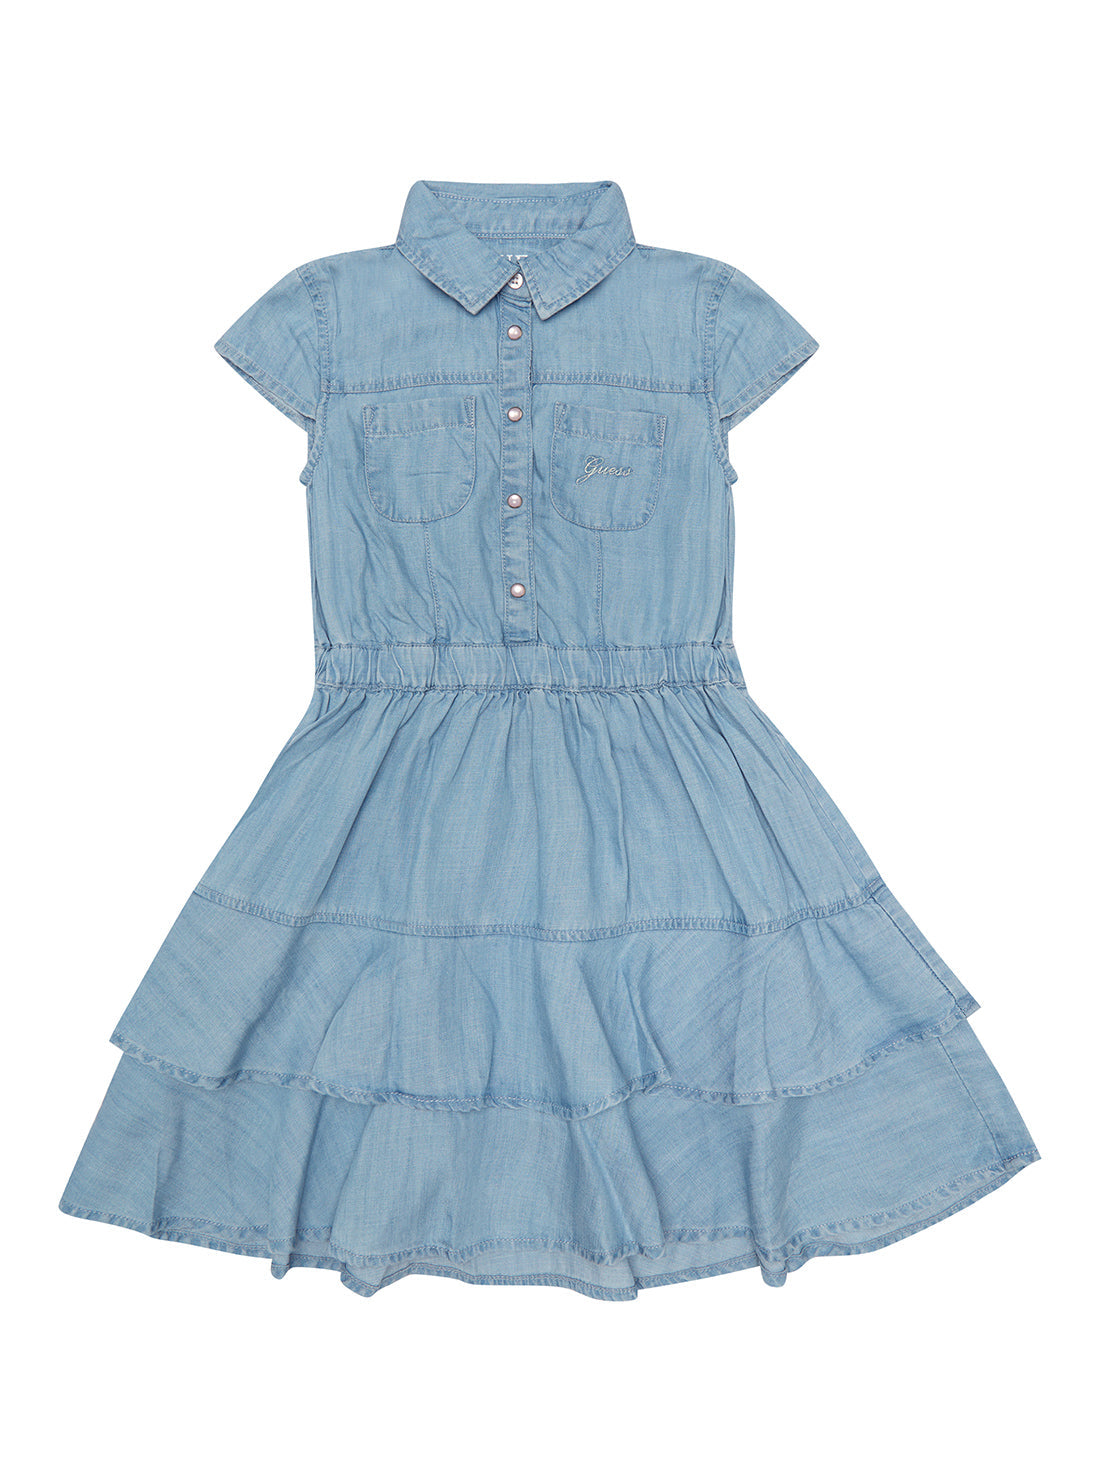 GUESS Little Girl Blue Wash Denim Dress (2-7) Front View